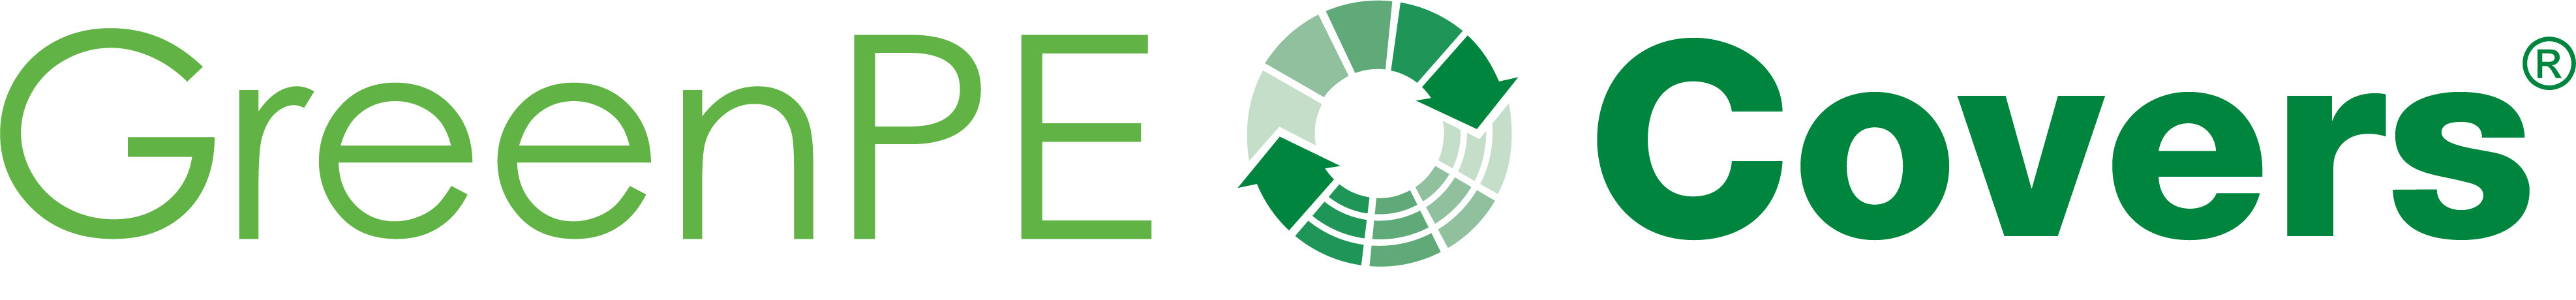 GreenPE Cover logo